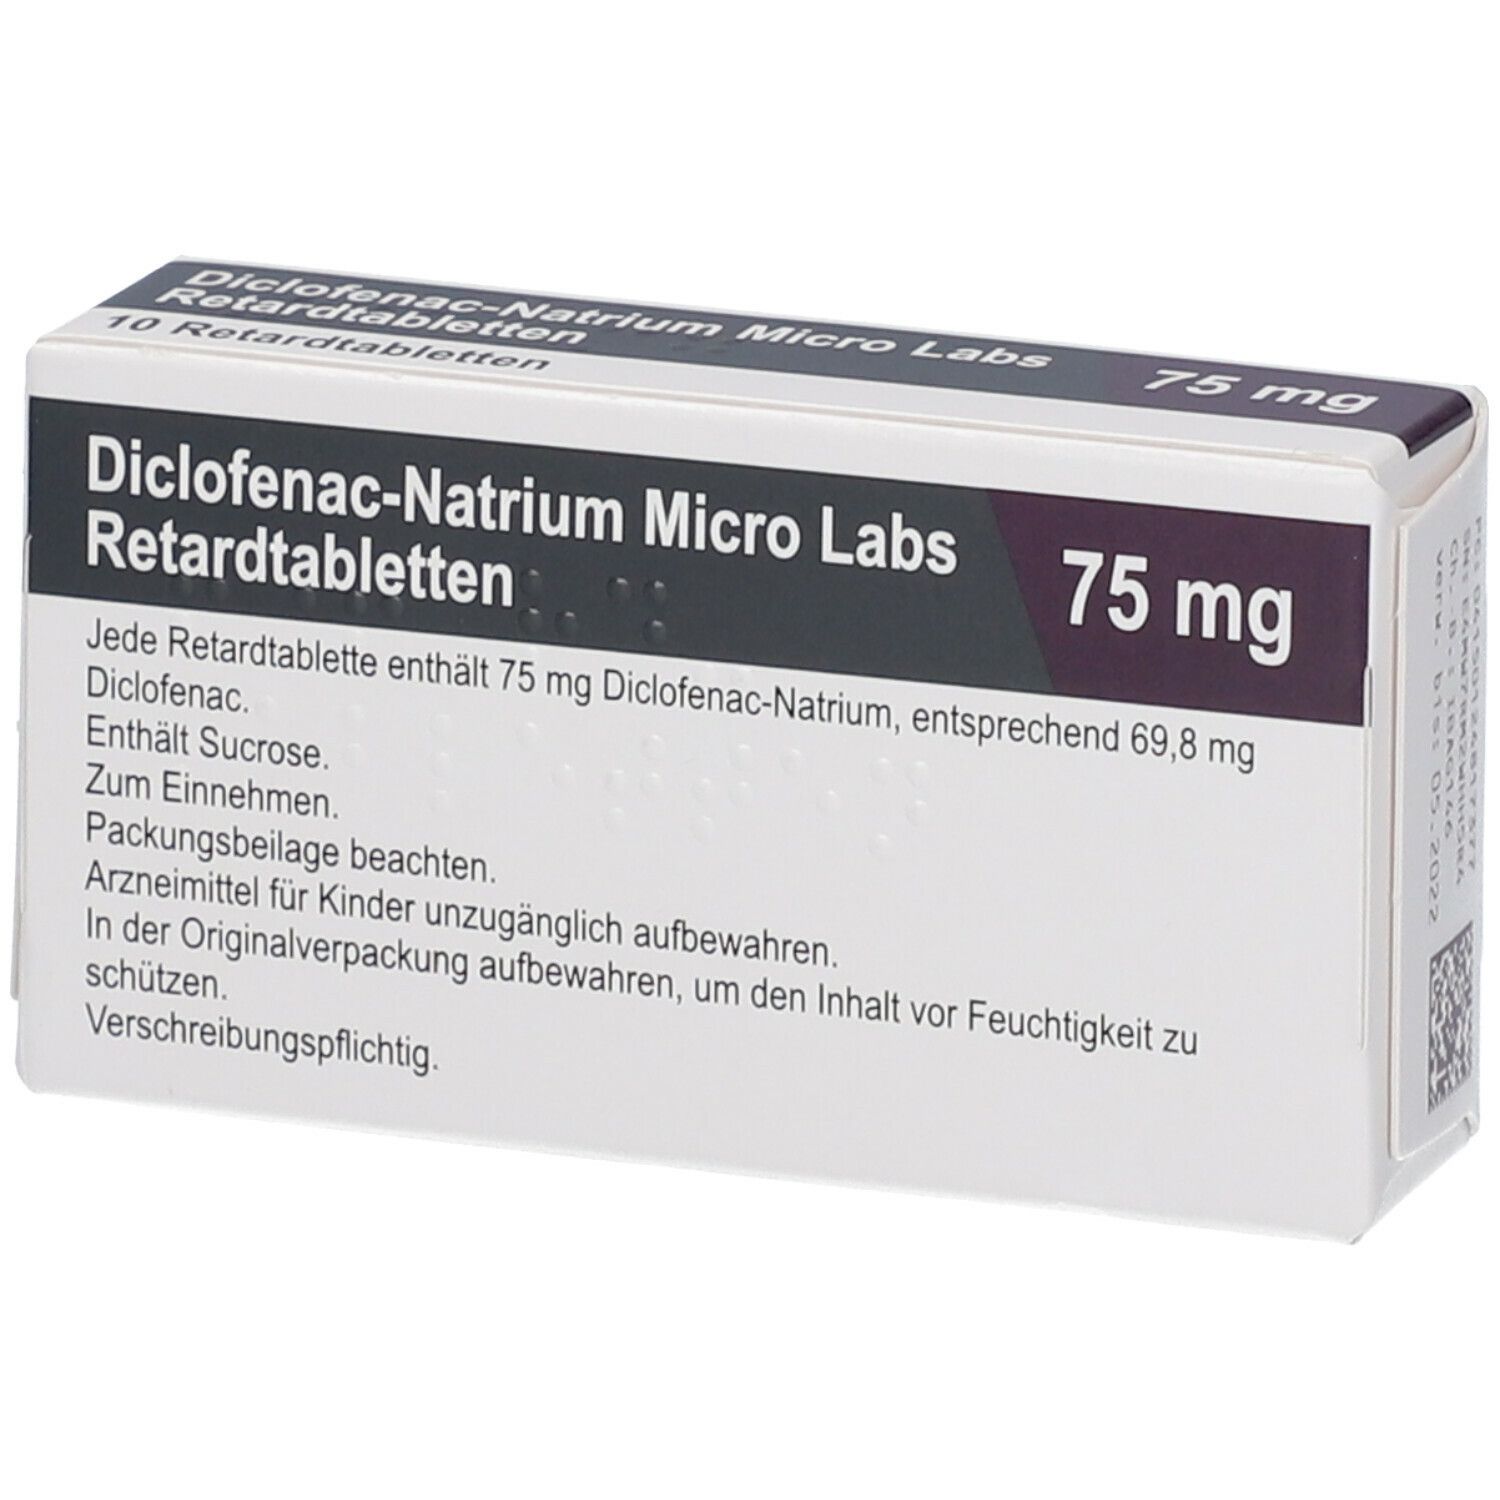 Diclofenac-Natrium Micro Labs 75 mg